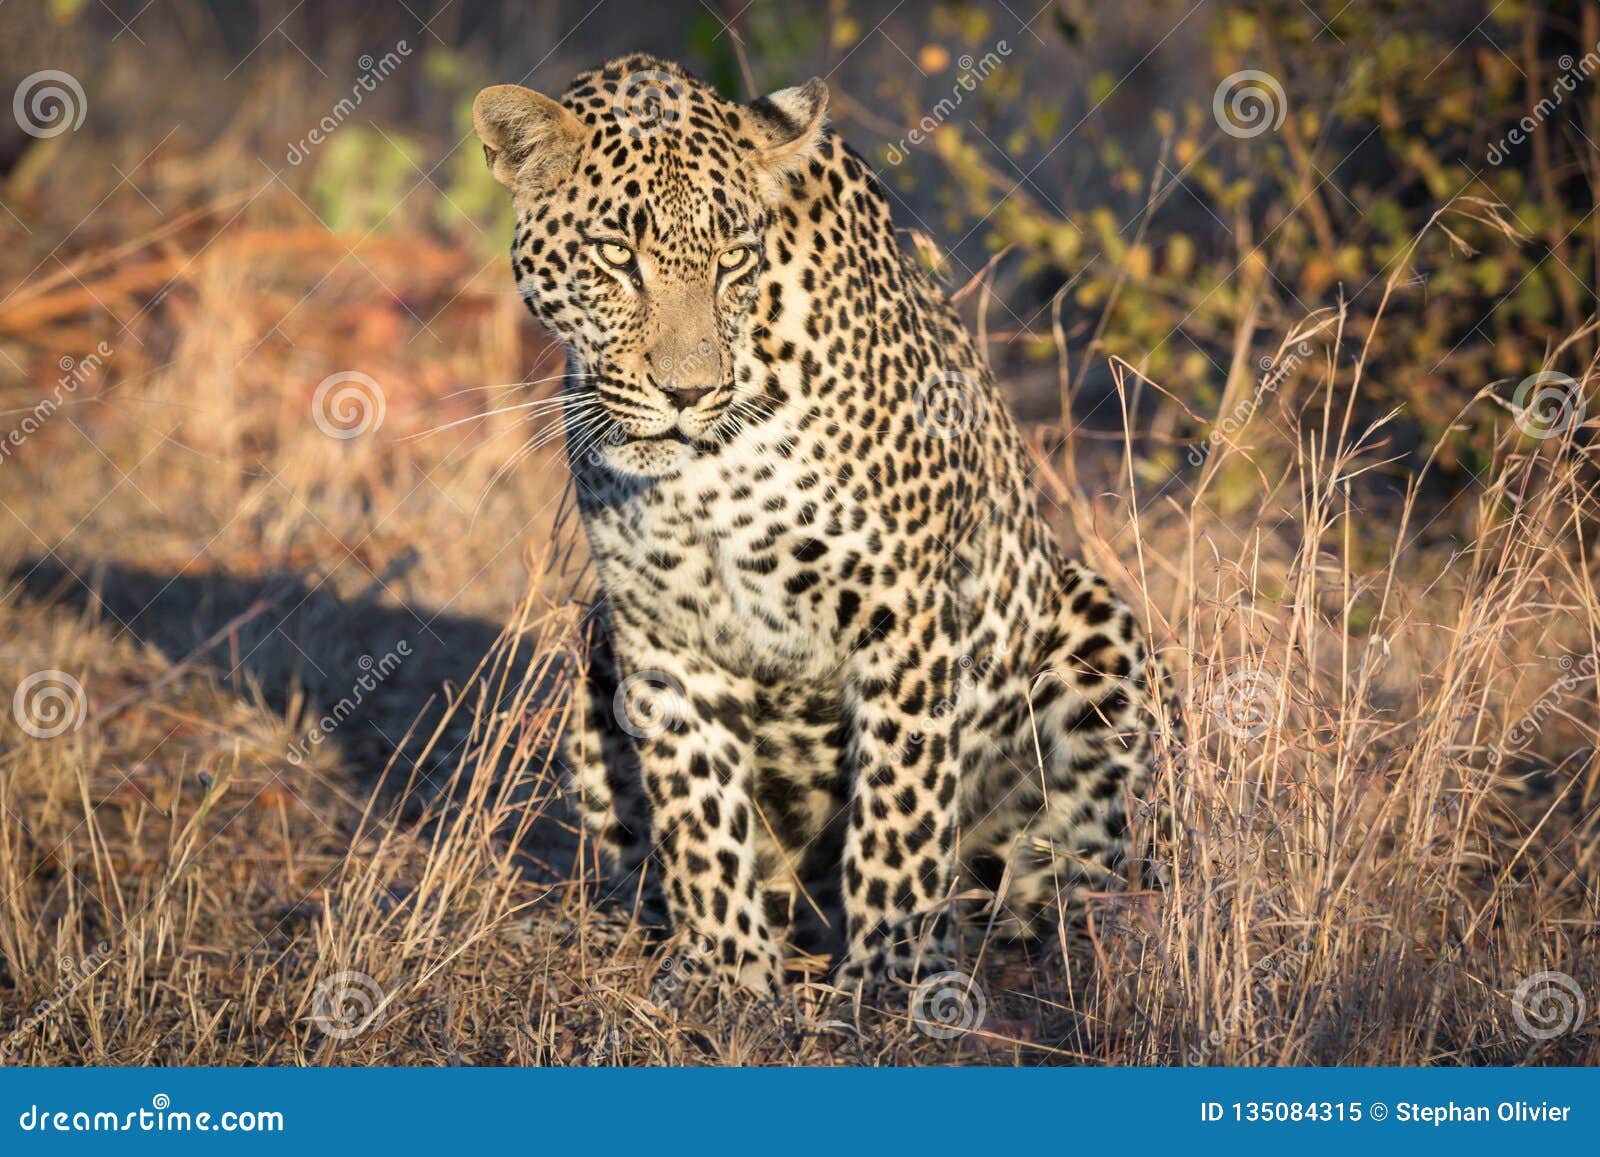 majestic looking leopard in sabi sands.